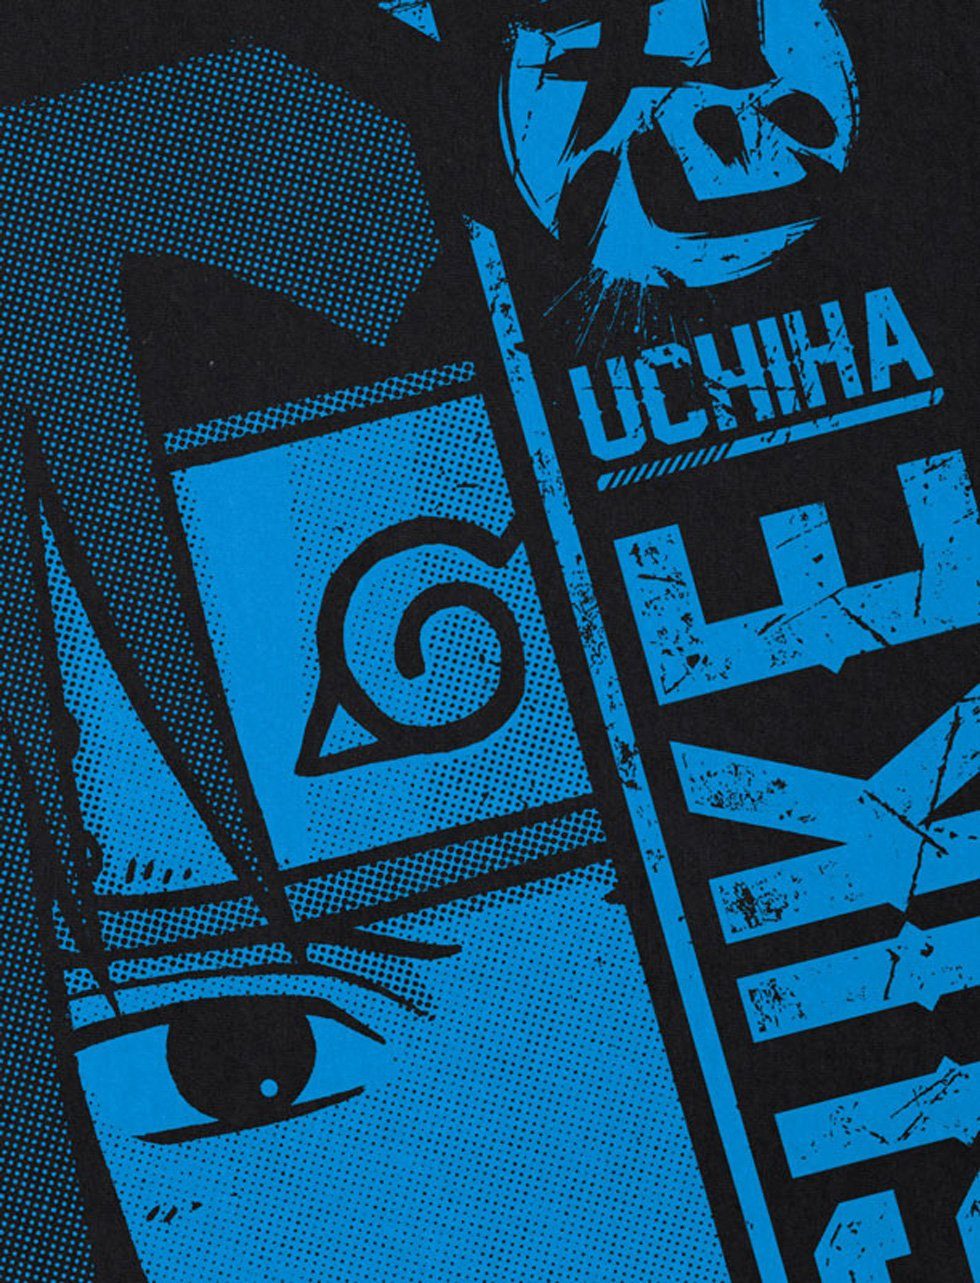 cosplay kakshi Uchiha hatake style3 ninja T-Shirt Kinder Print-Shirt Sasuke anime manga